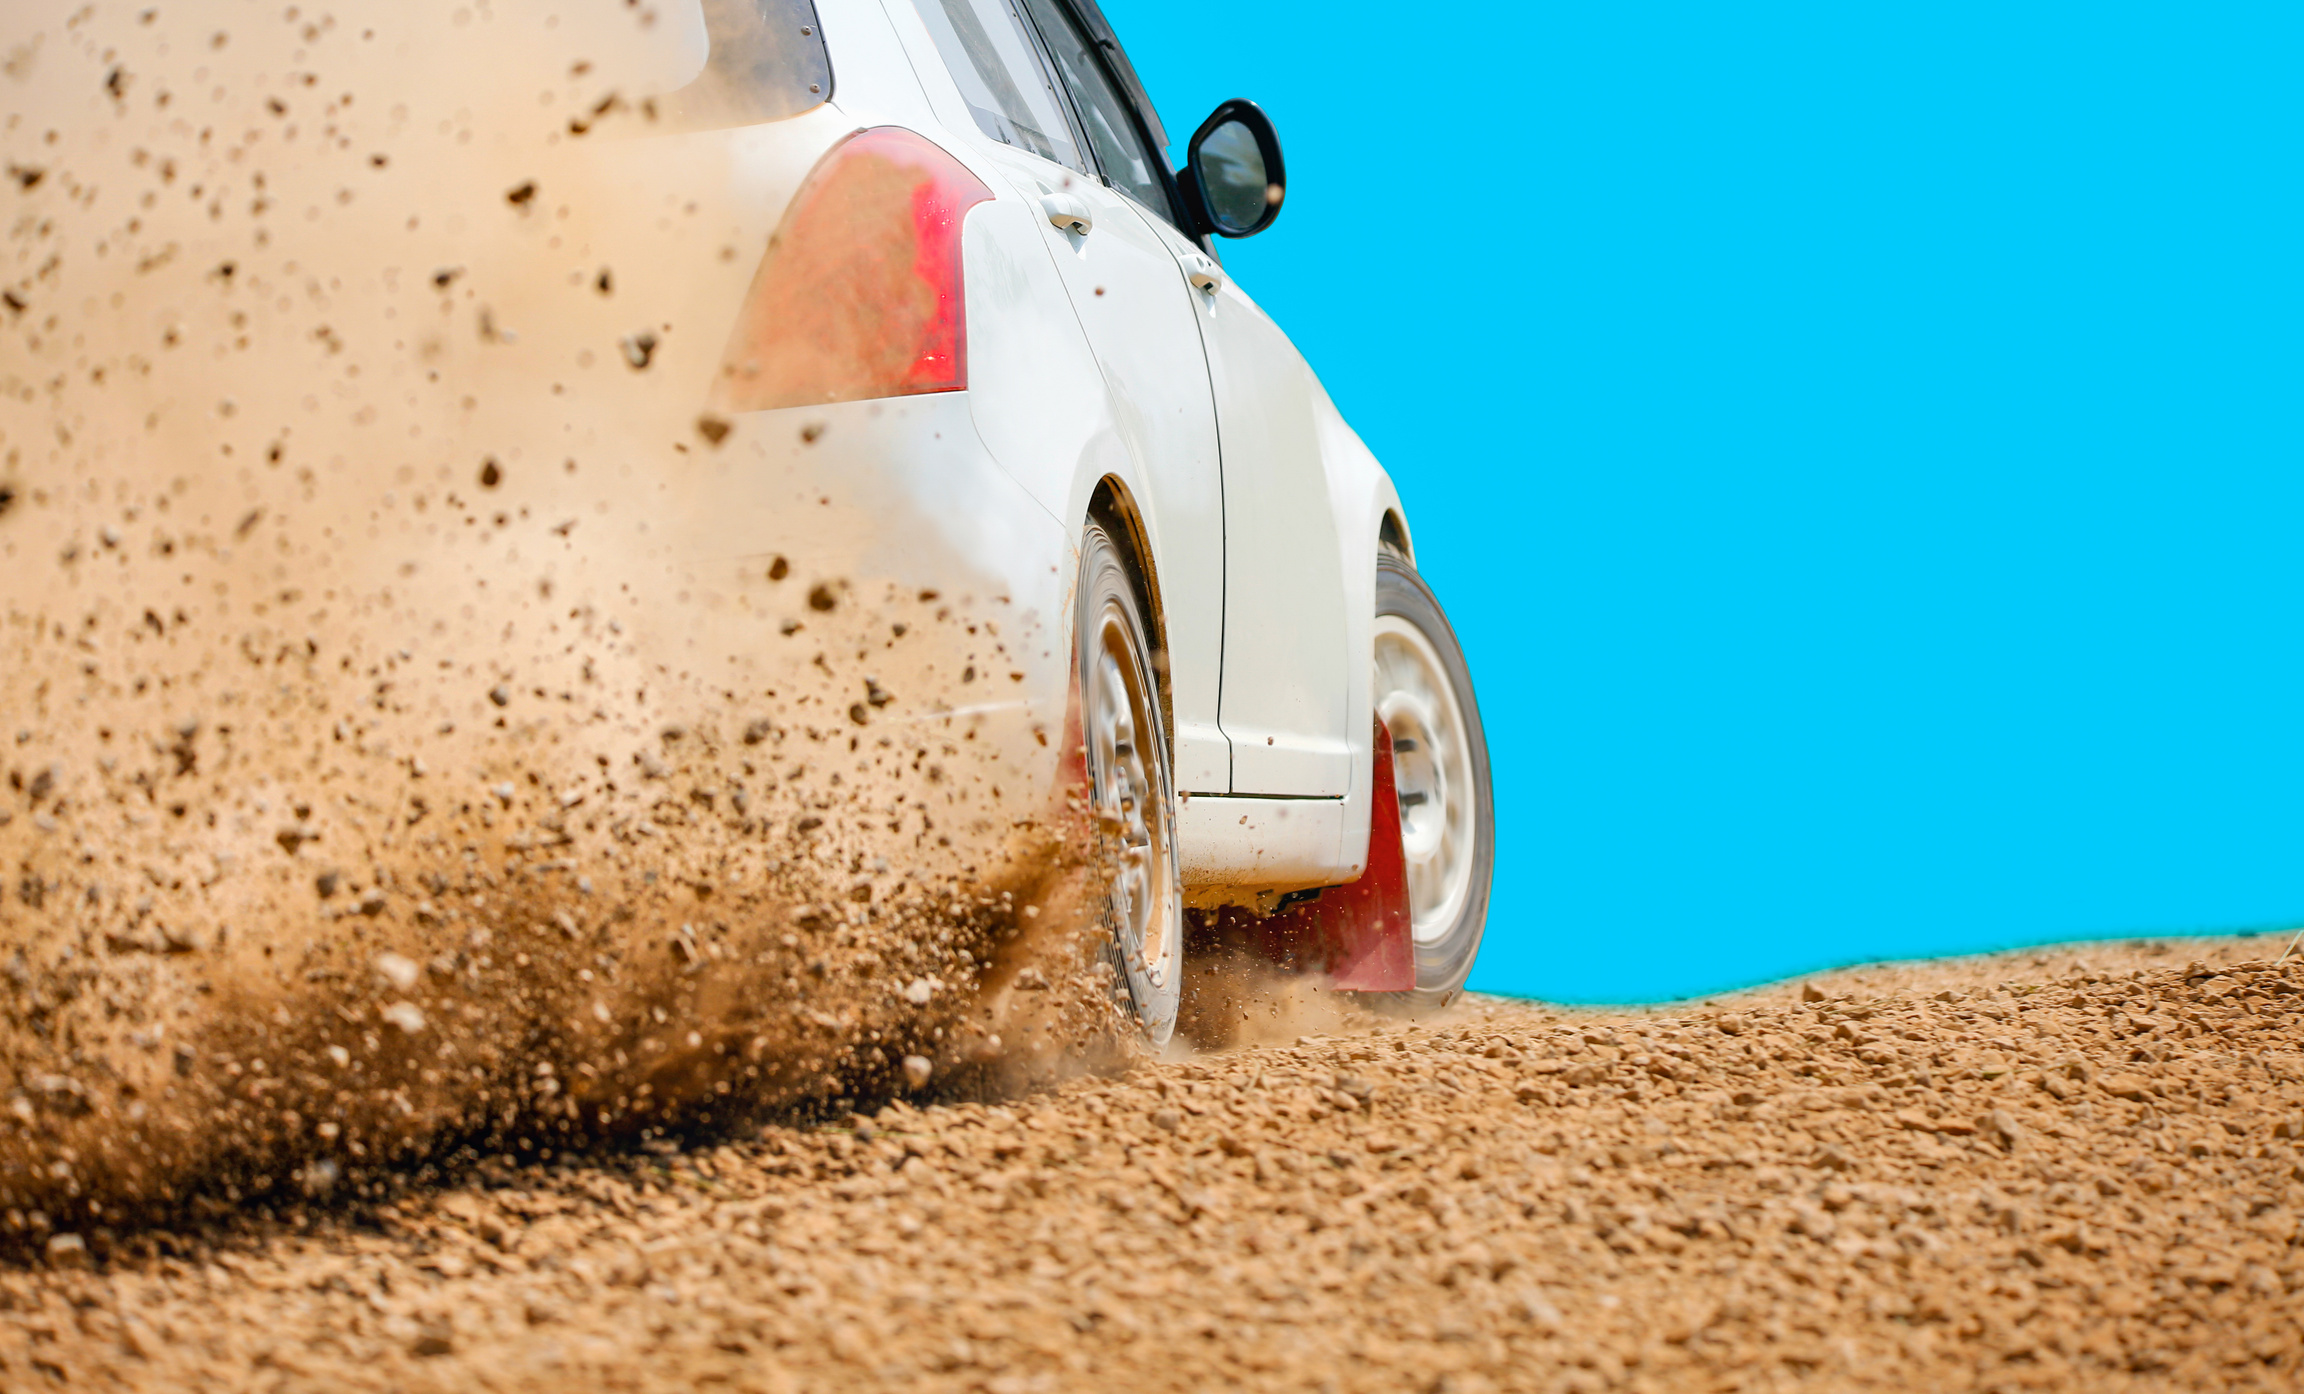 Rally Race Car Drifting on Dirt Track